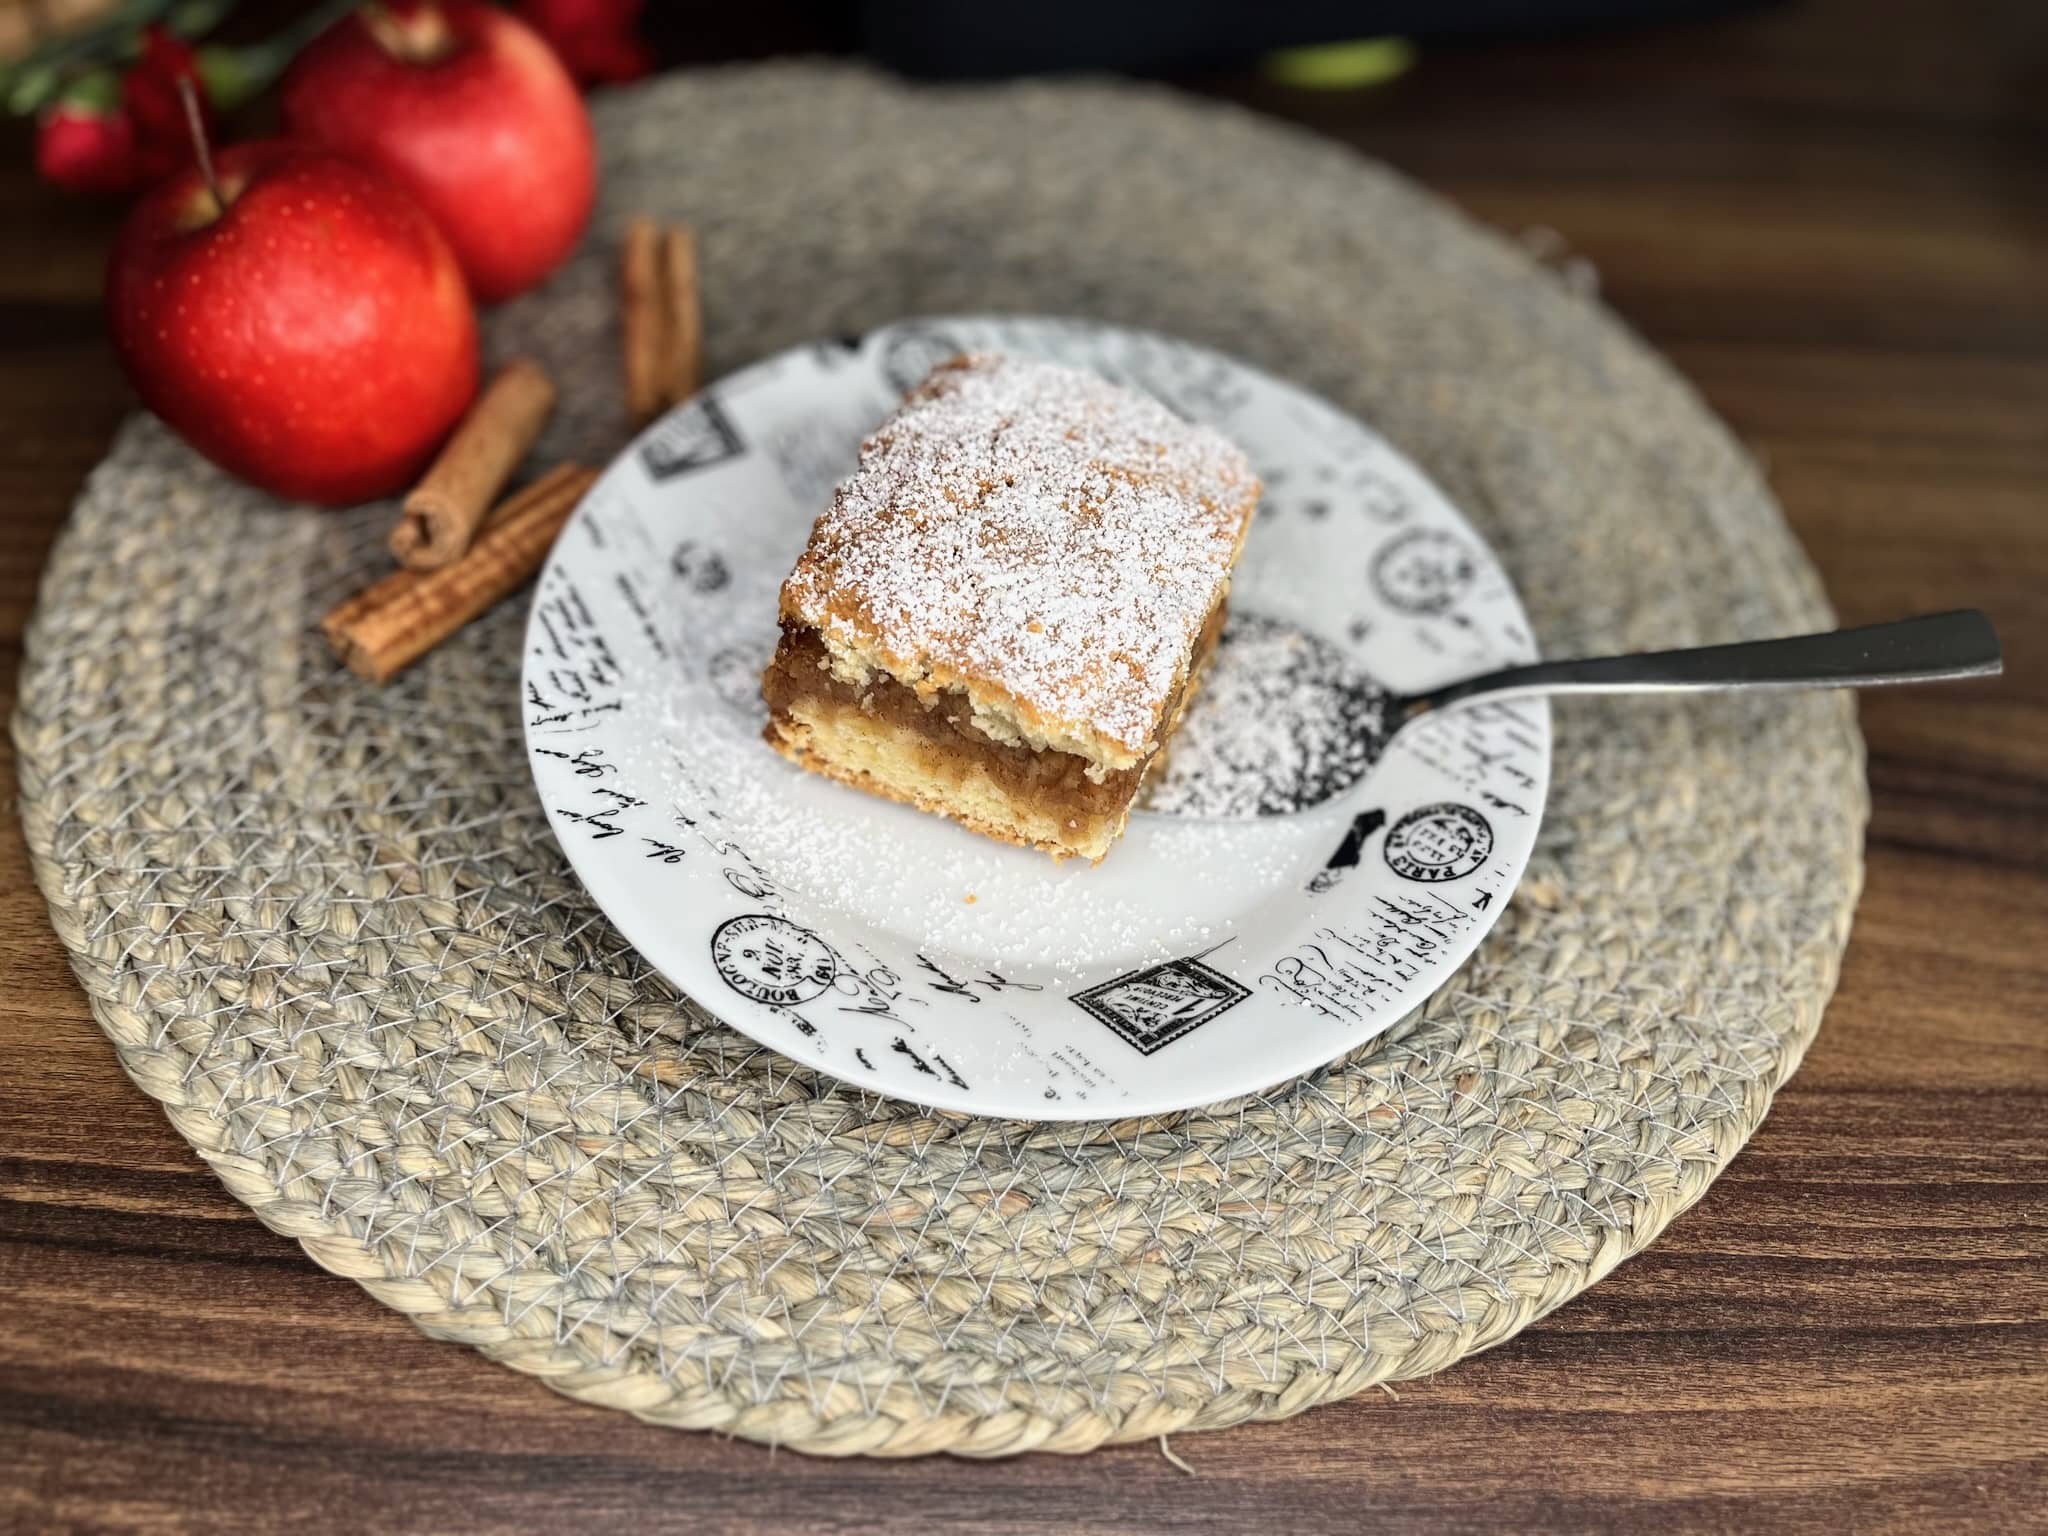 A generous slice of Polish Apple Cake